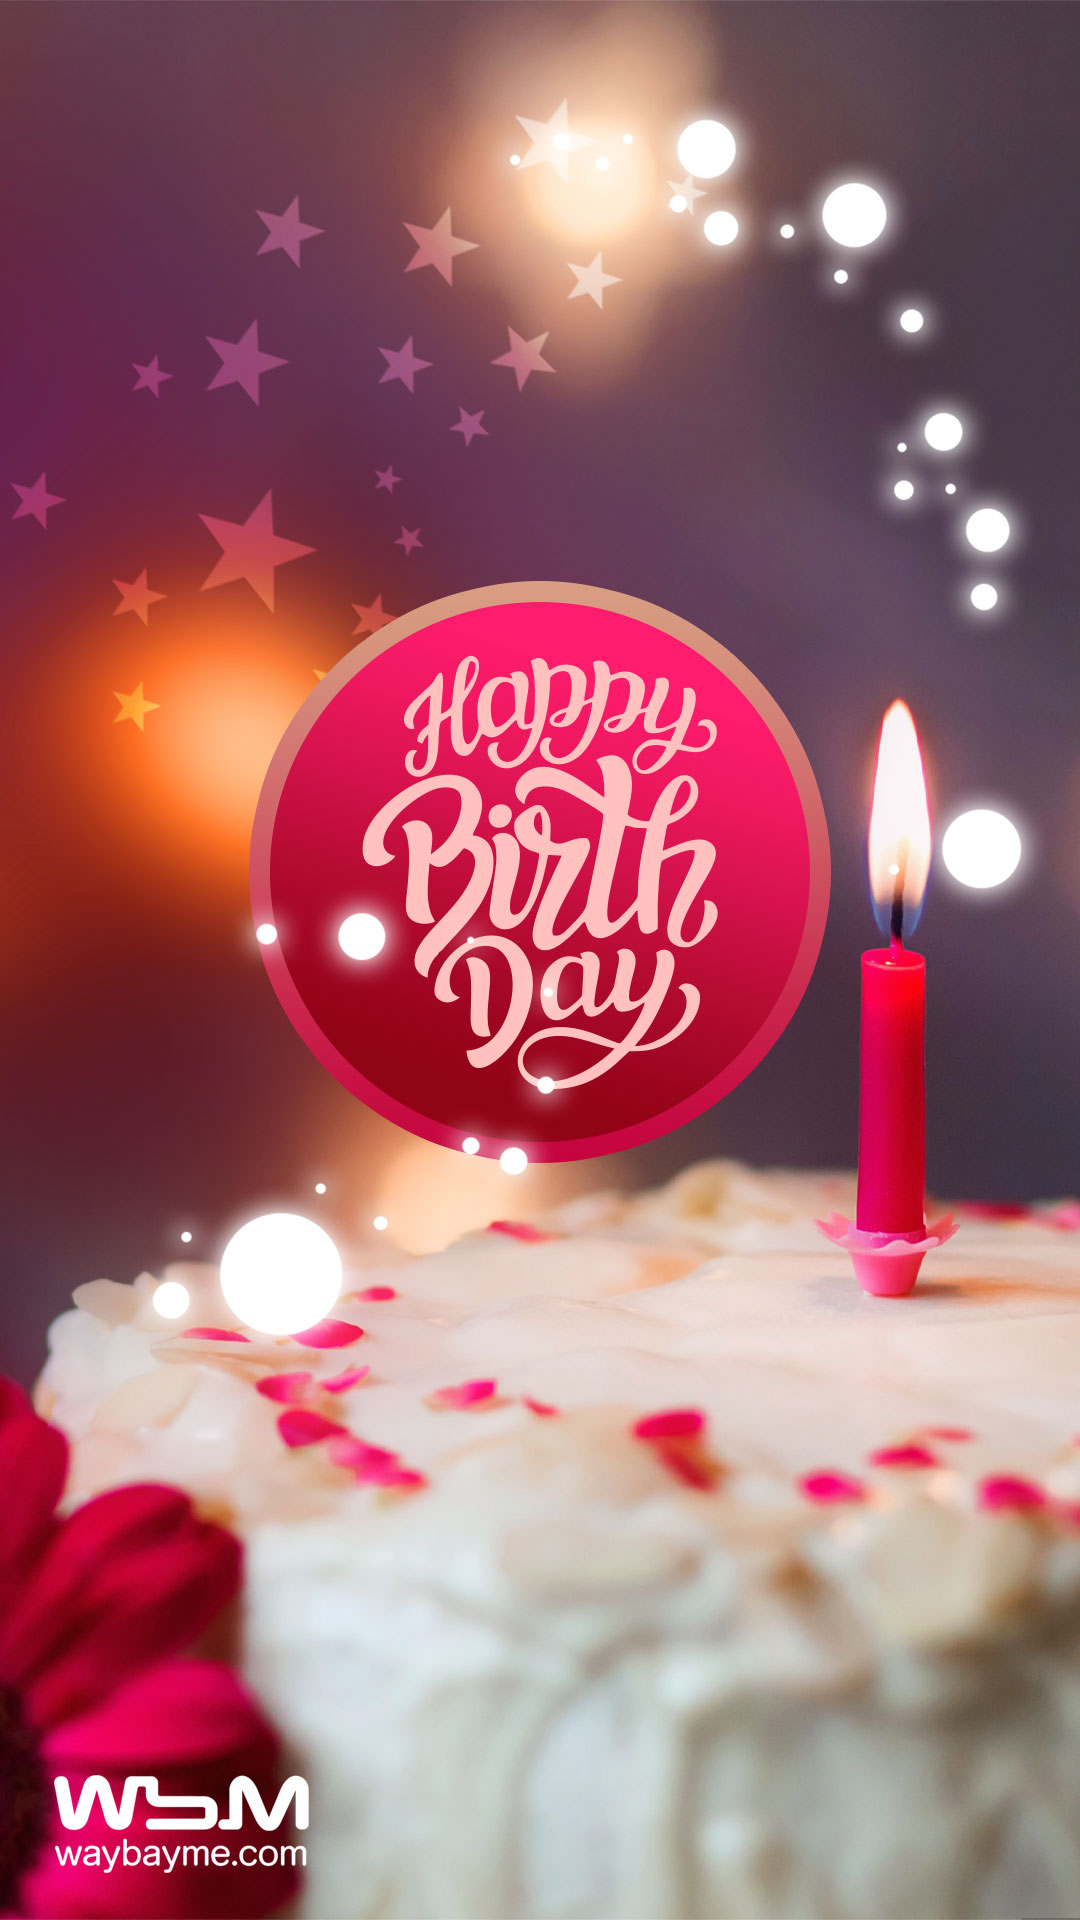 Happy Birthday, Birthday Greetings, Birthday Wishes, Birthday Card, Birthday Image, Birthday Message, Birthday Wishes, Birthday Gift